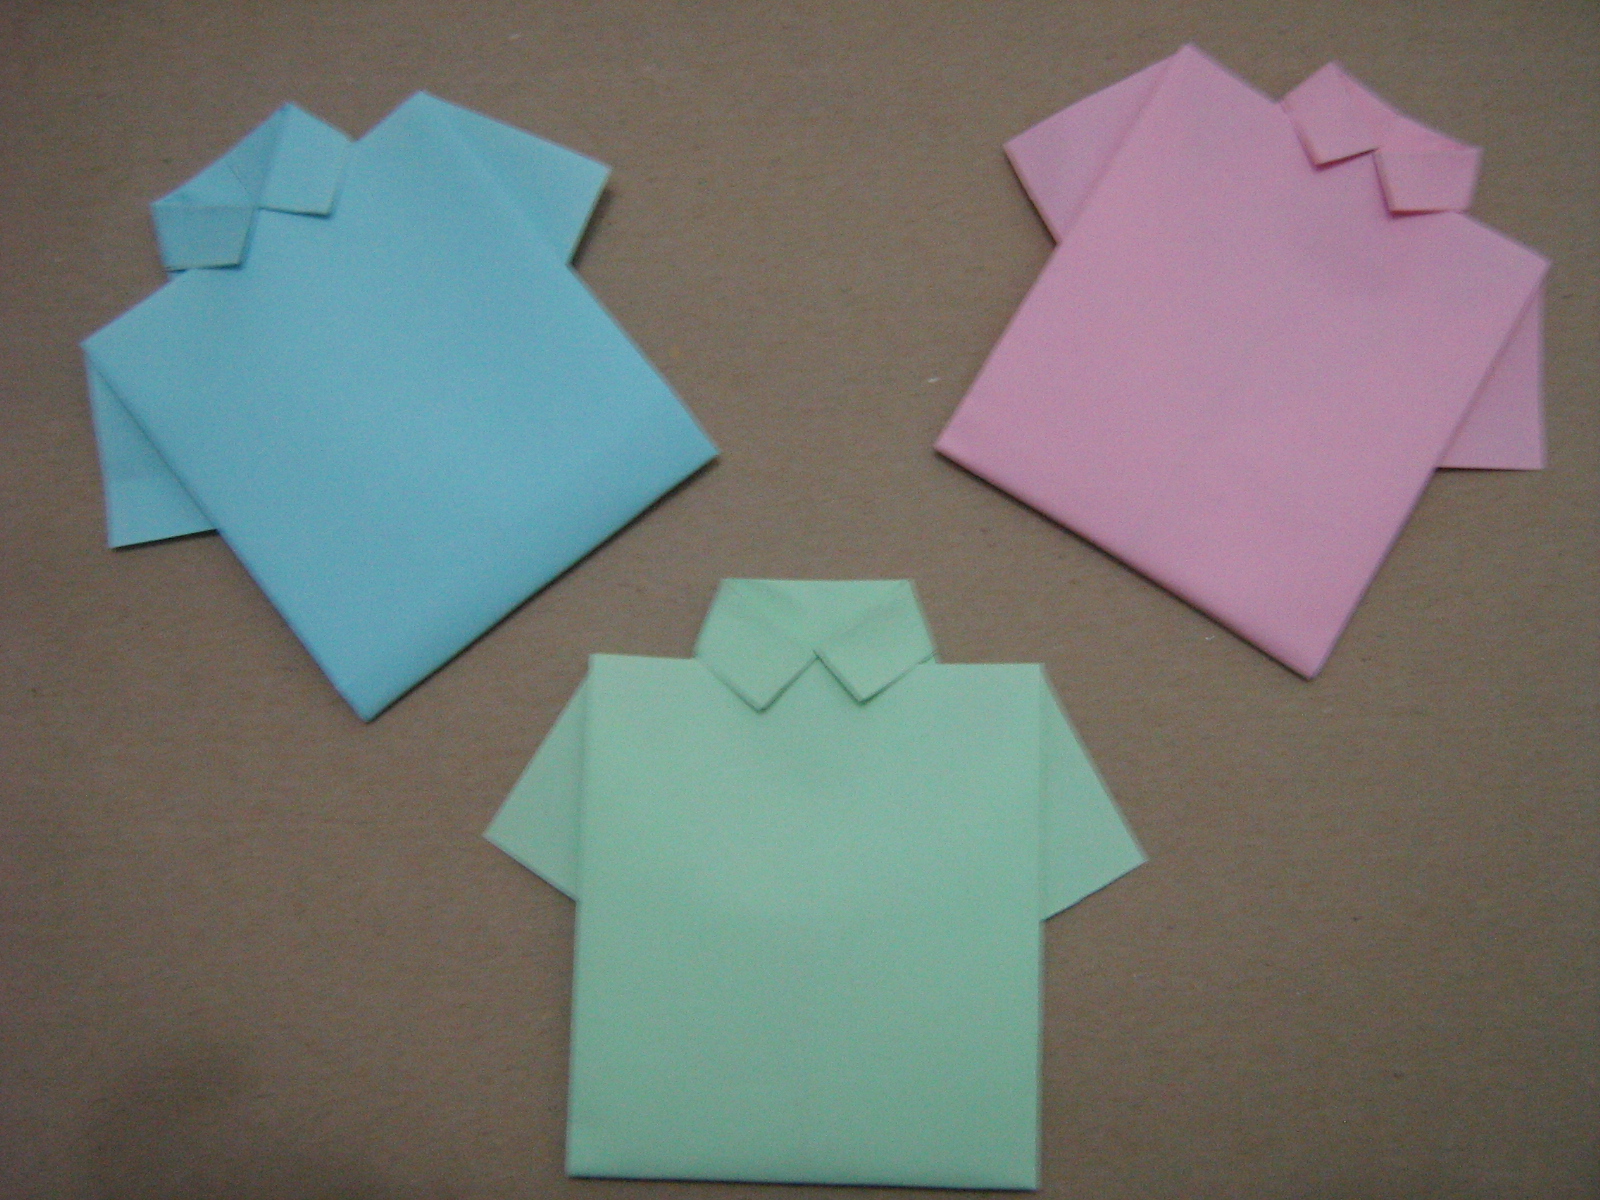 42 Origami  Baju  Seragam Sekolah Trend Masa Kini